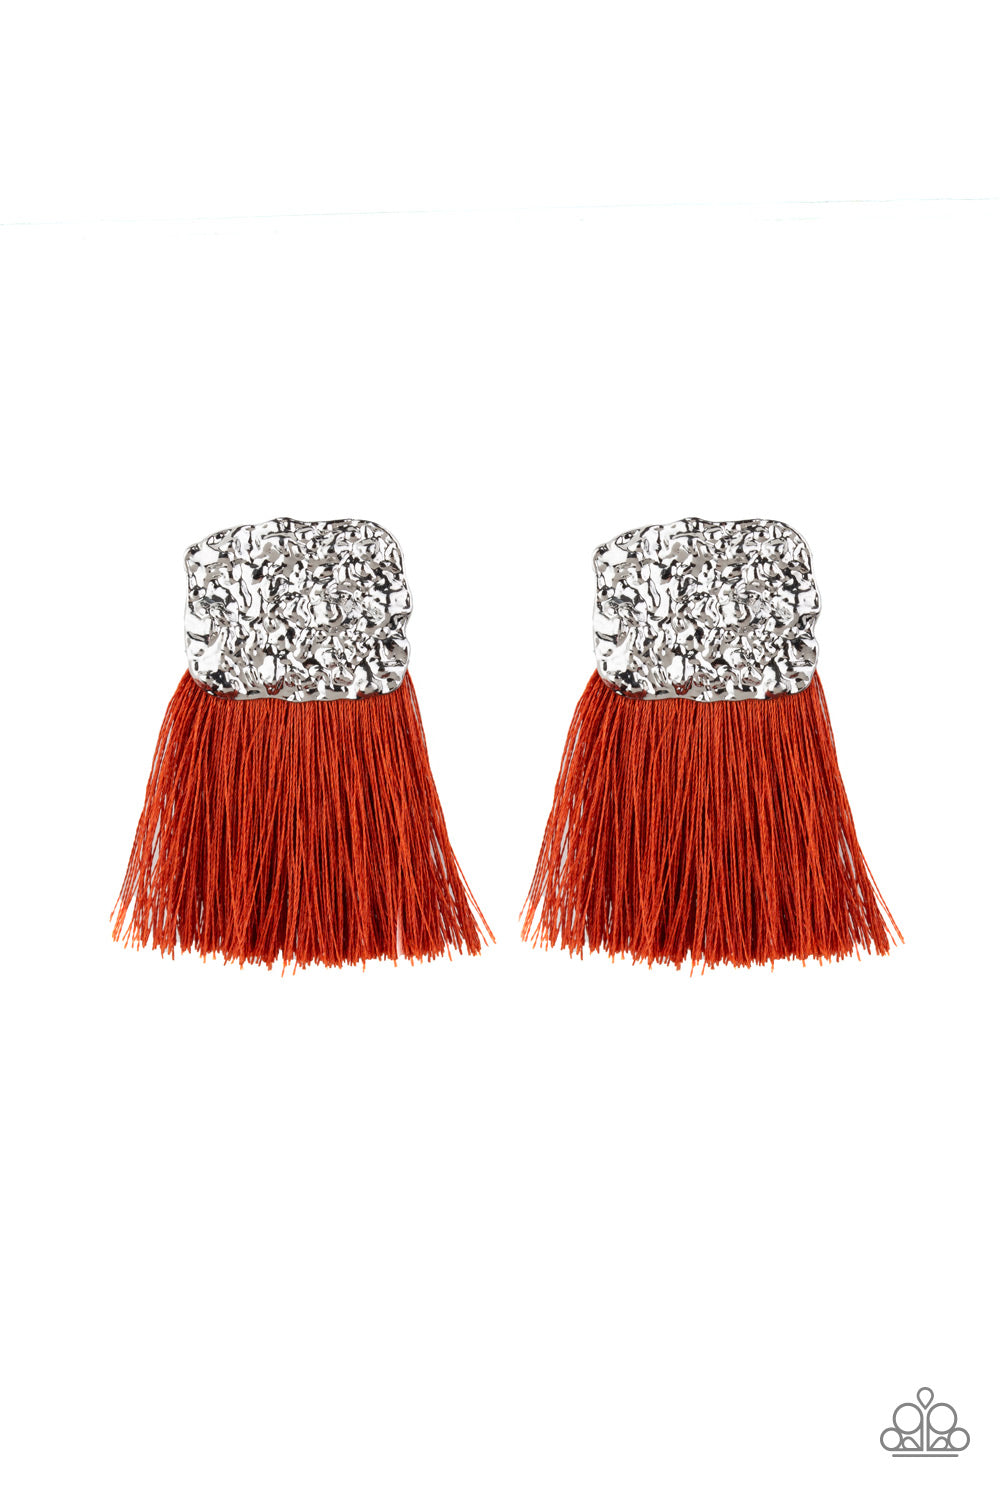 Plume Bloom - Orange fringe earrings